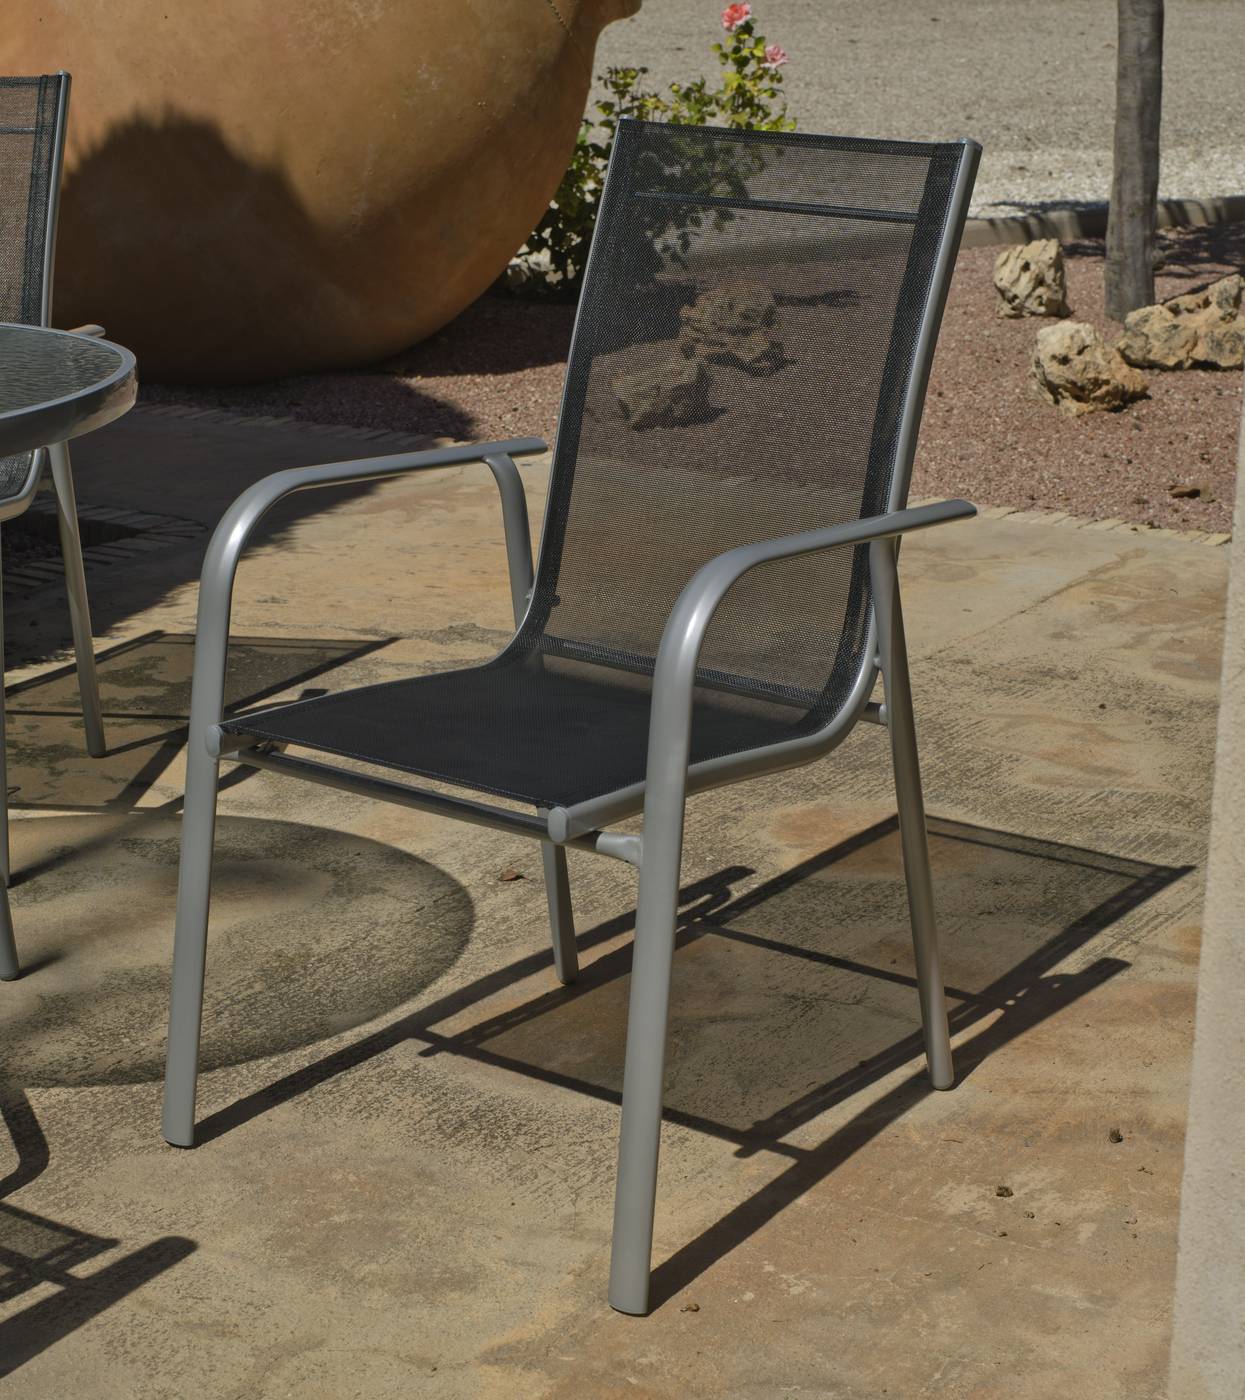 Conjunto Aluminio Nora 90-4 - Conjunto de aluminio color plata: mesa redonda con tablero cristal templado + 4 sillones de aluminio y textilen